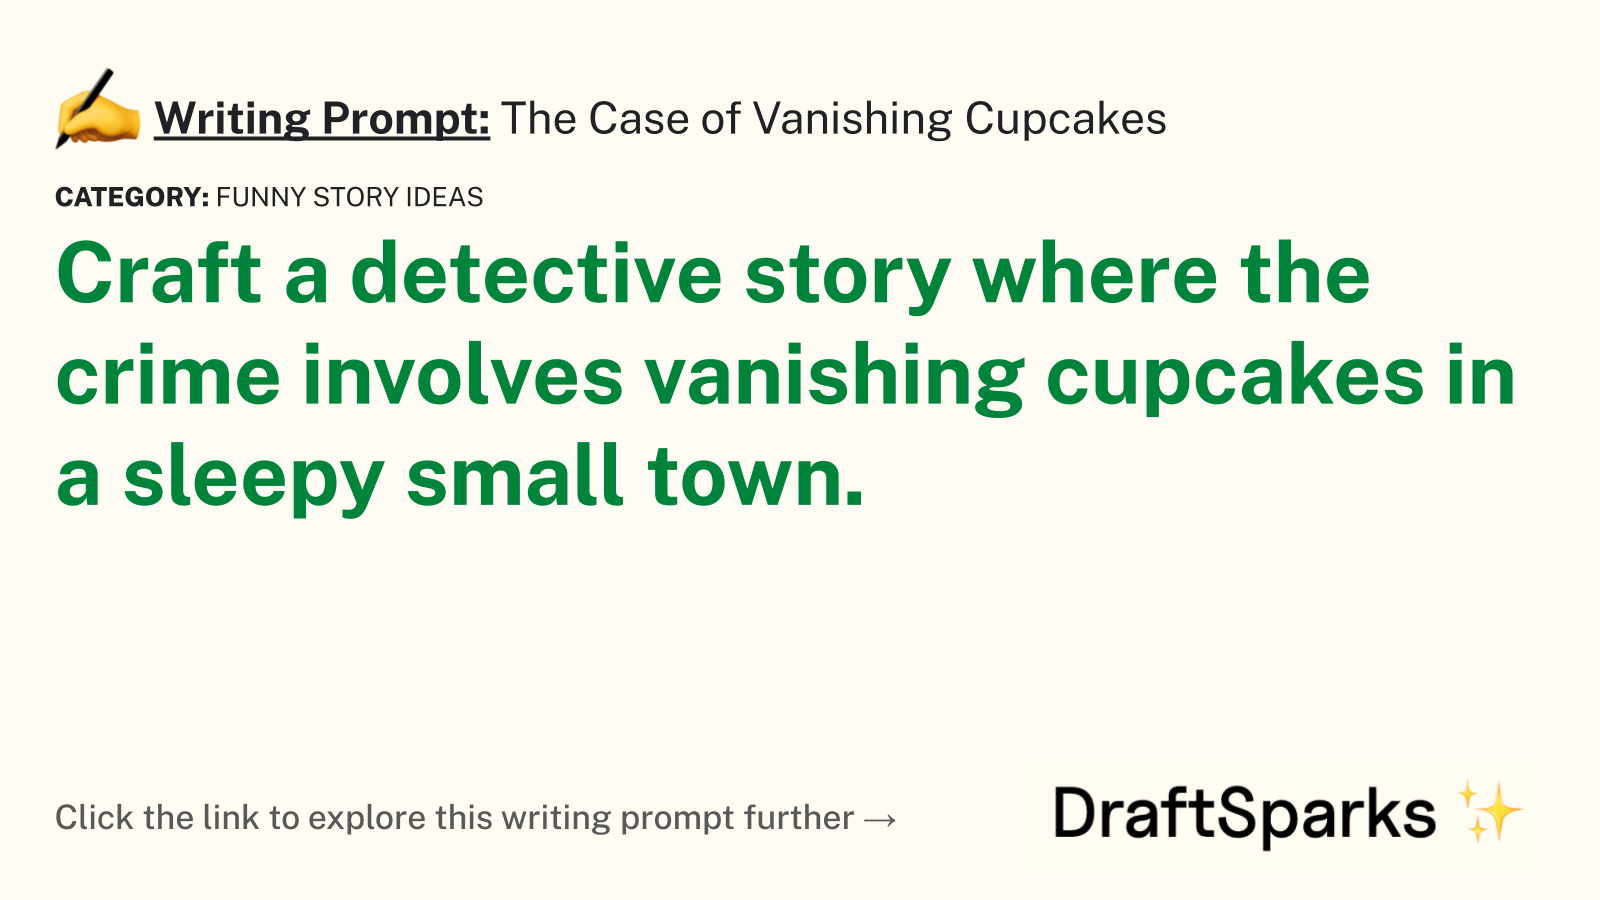 The Case of Vanishing Cupcakes